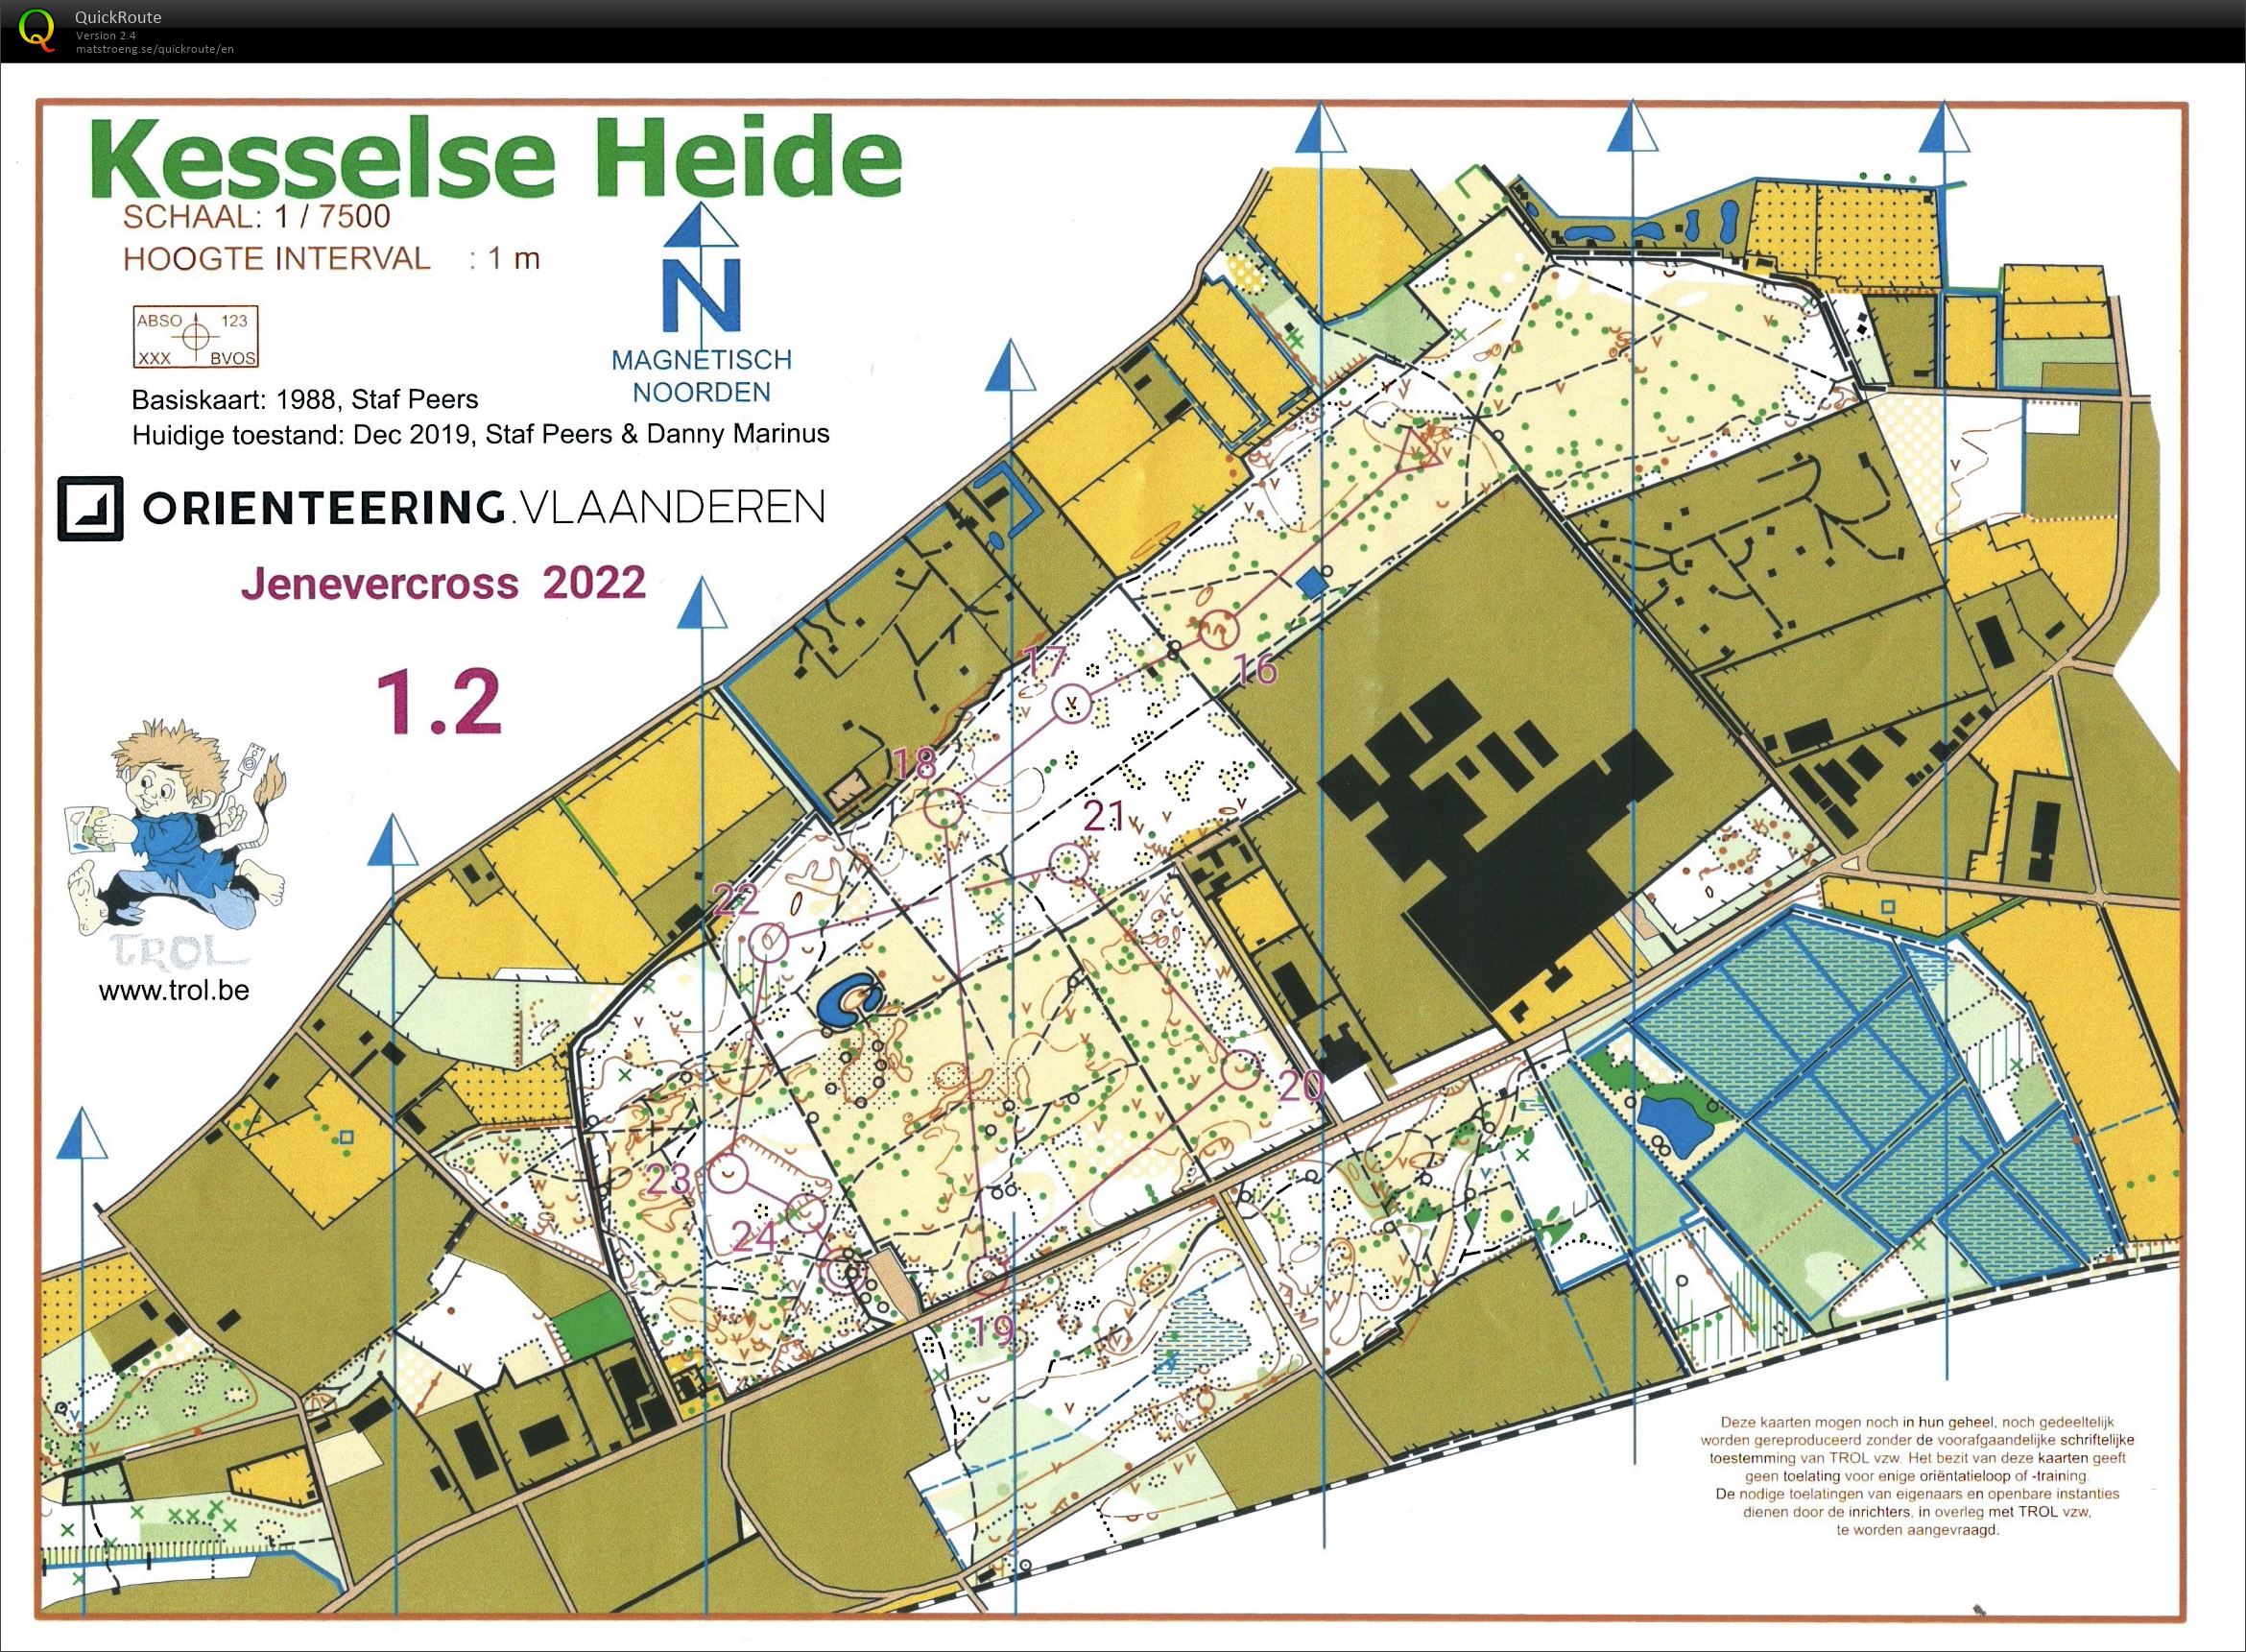 Jenevercross 2022 - Kesselse Heide - 1.2 (2022-01-07)